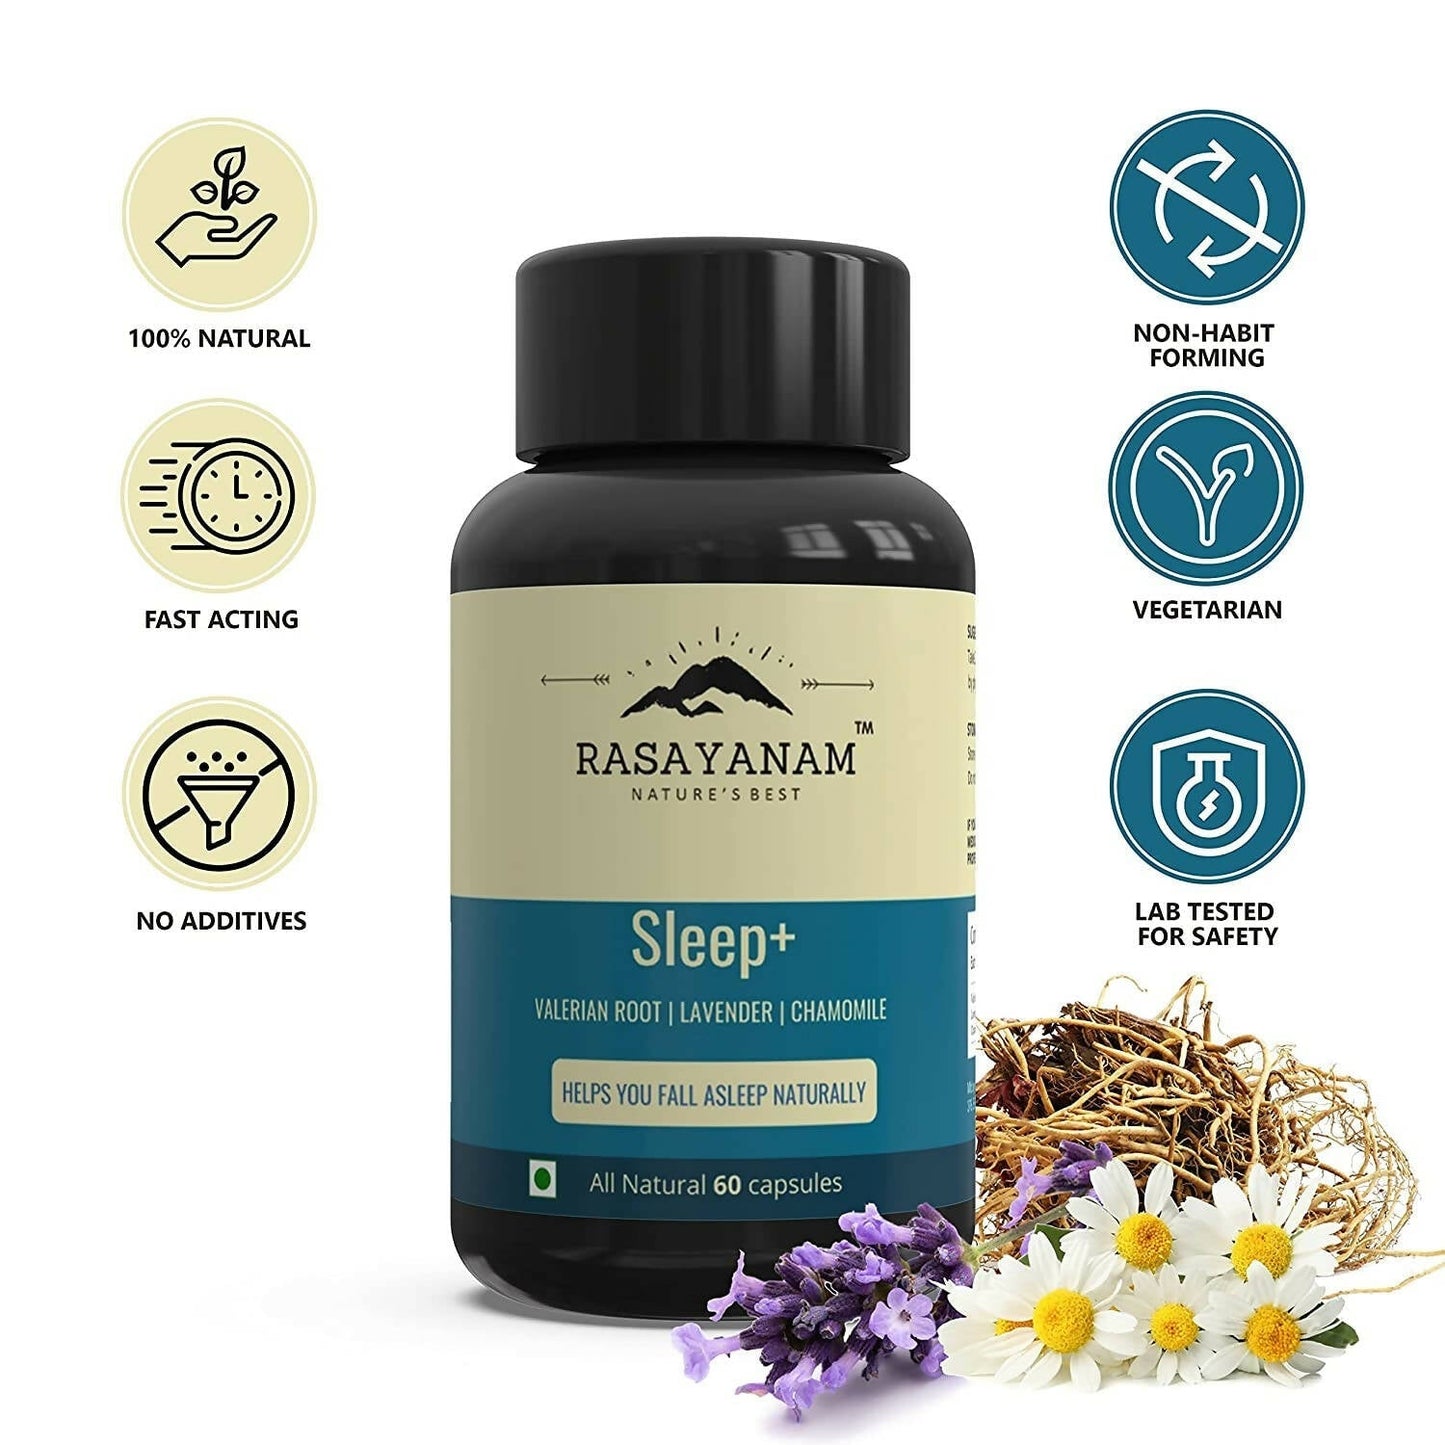 Rasayanam Sleep+ Capsules with Valerian Root, Lavender, Chamomile